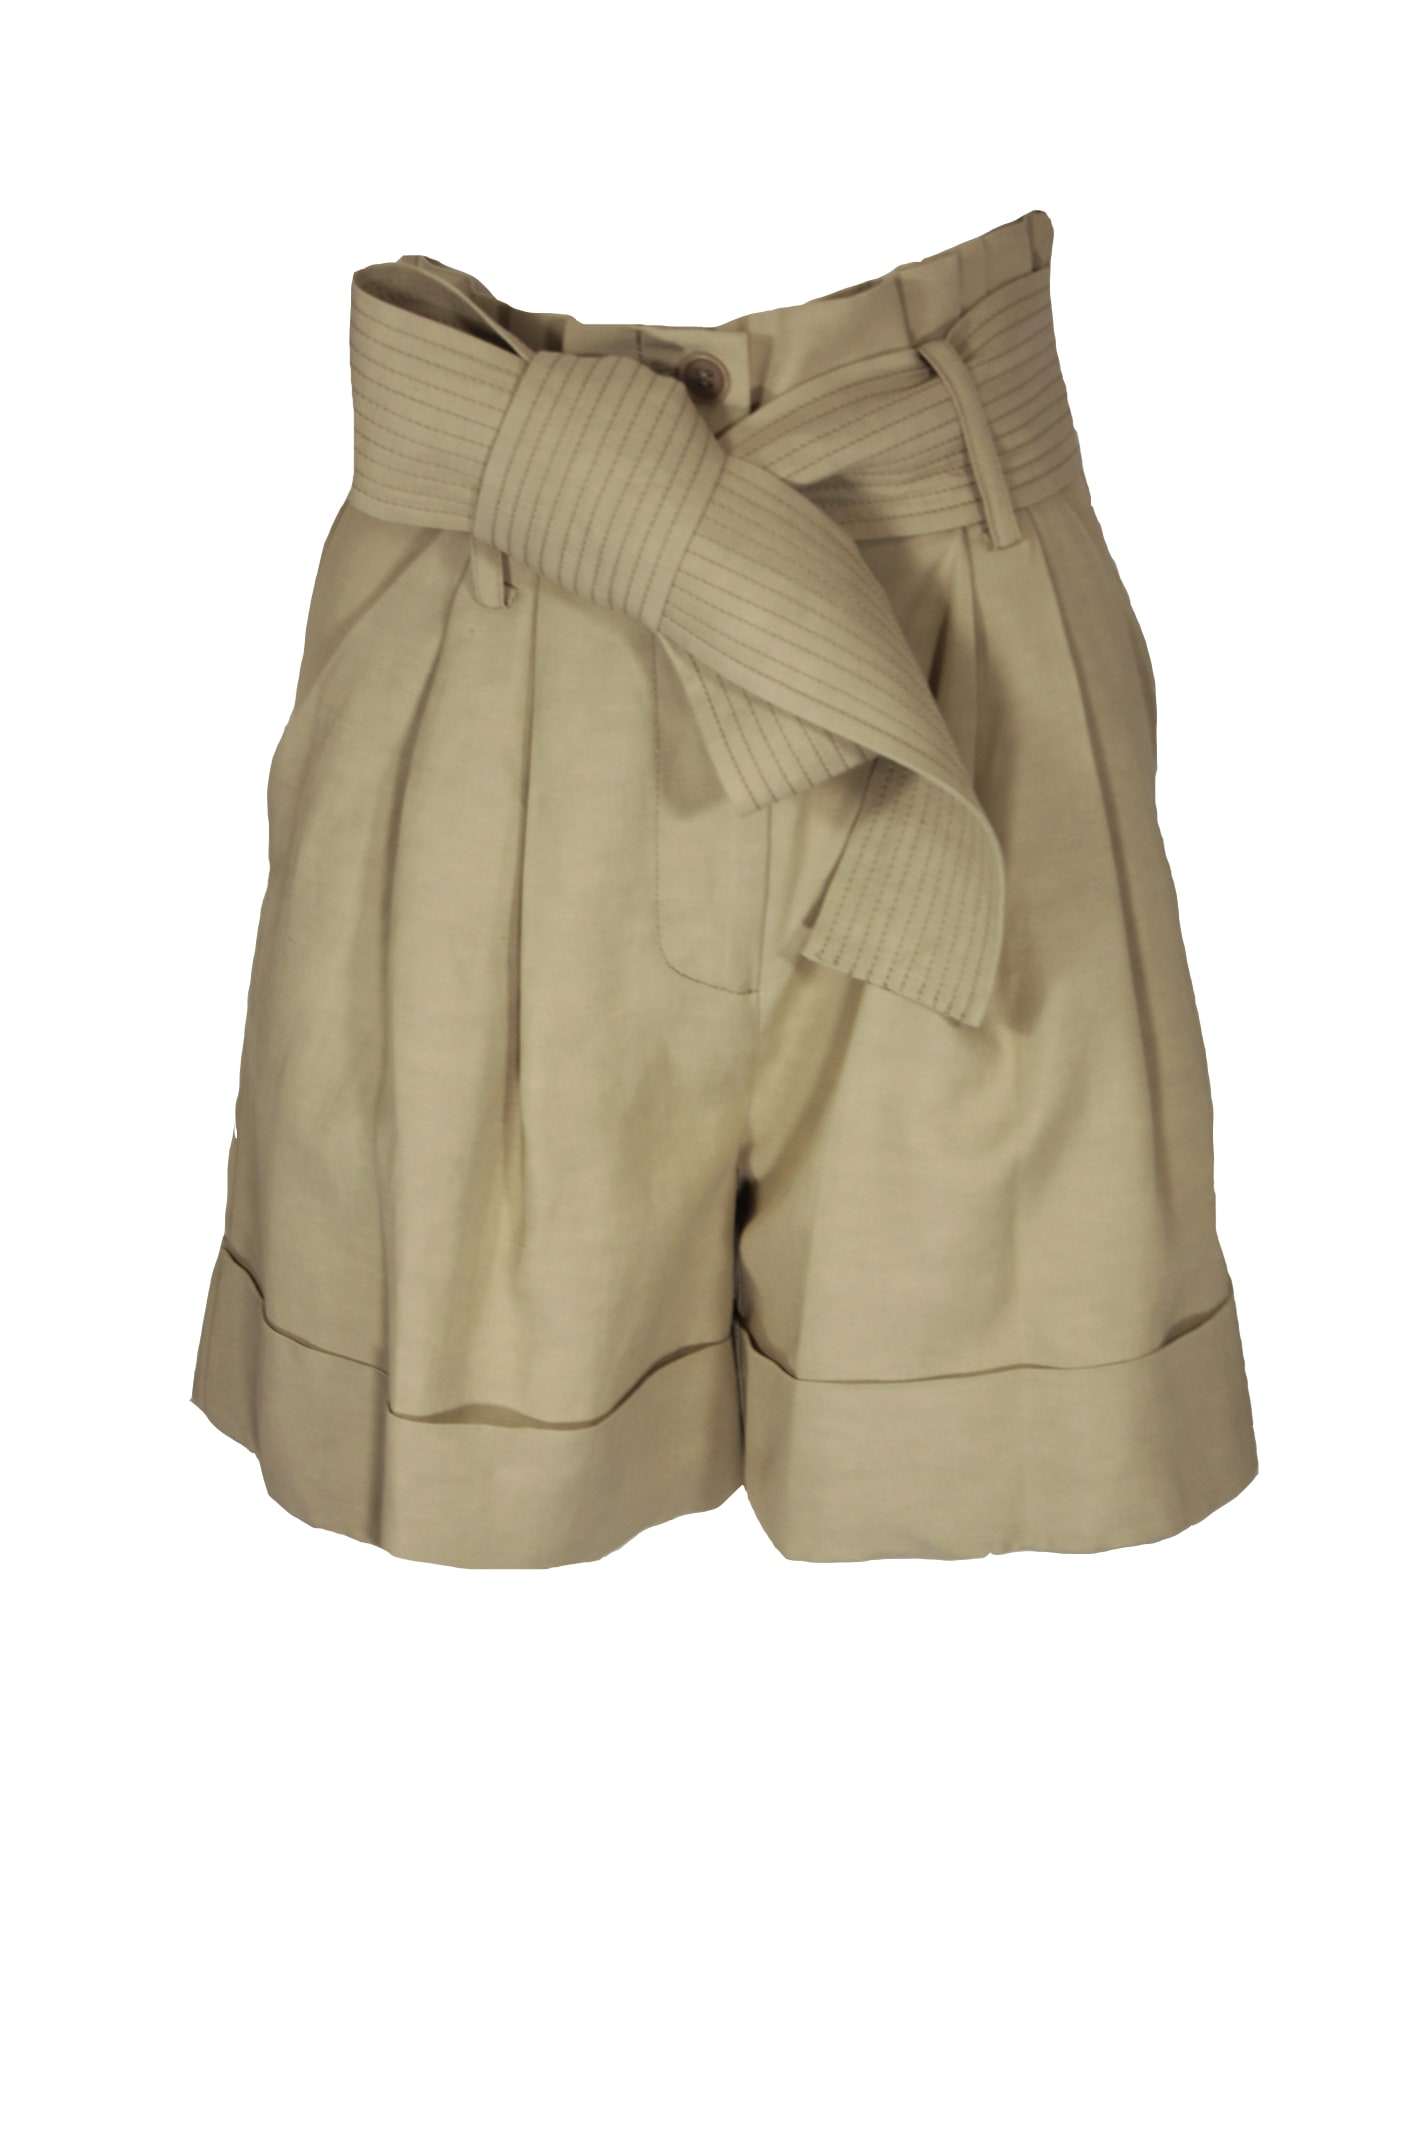 Parosh Belted Cotton Shorts